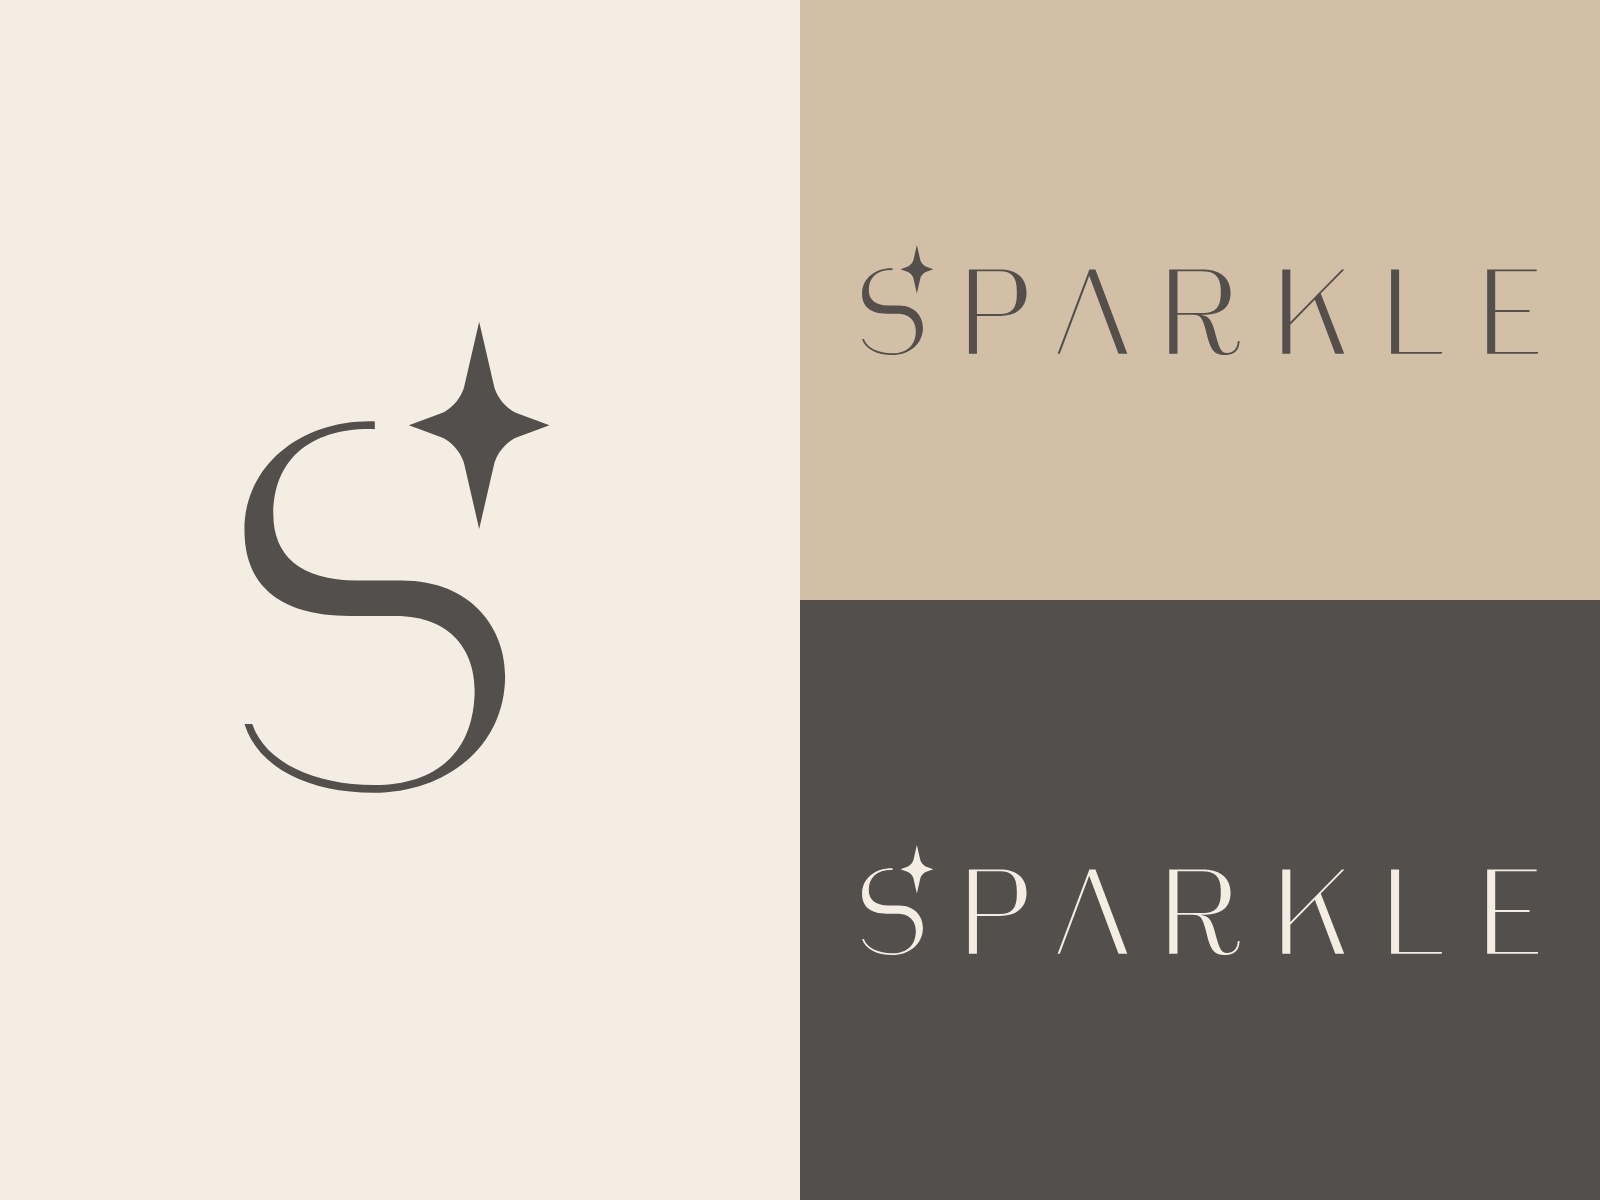 Sparkle logo by Klaudia Sagan on Dribbble